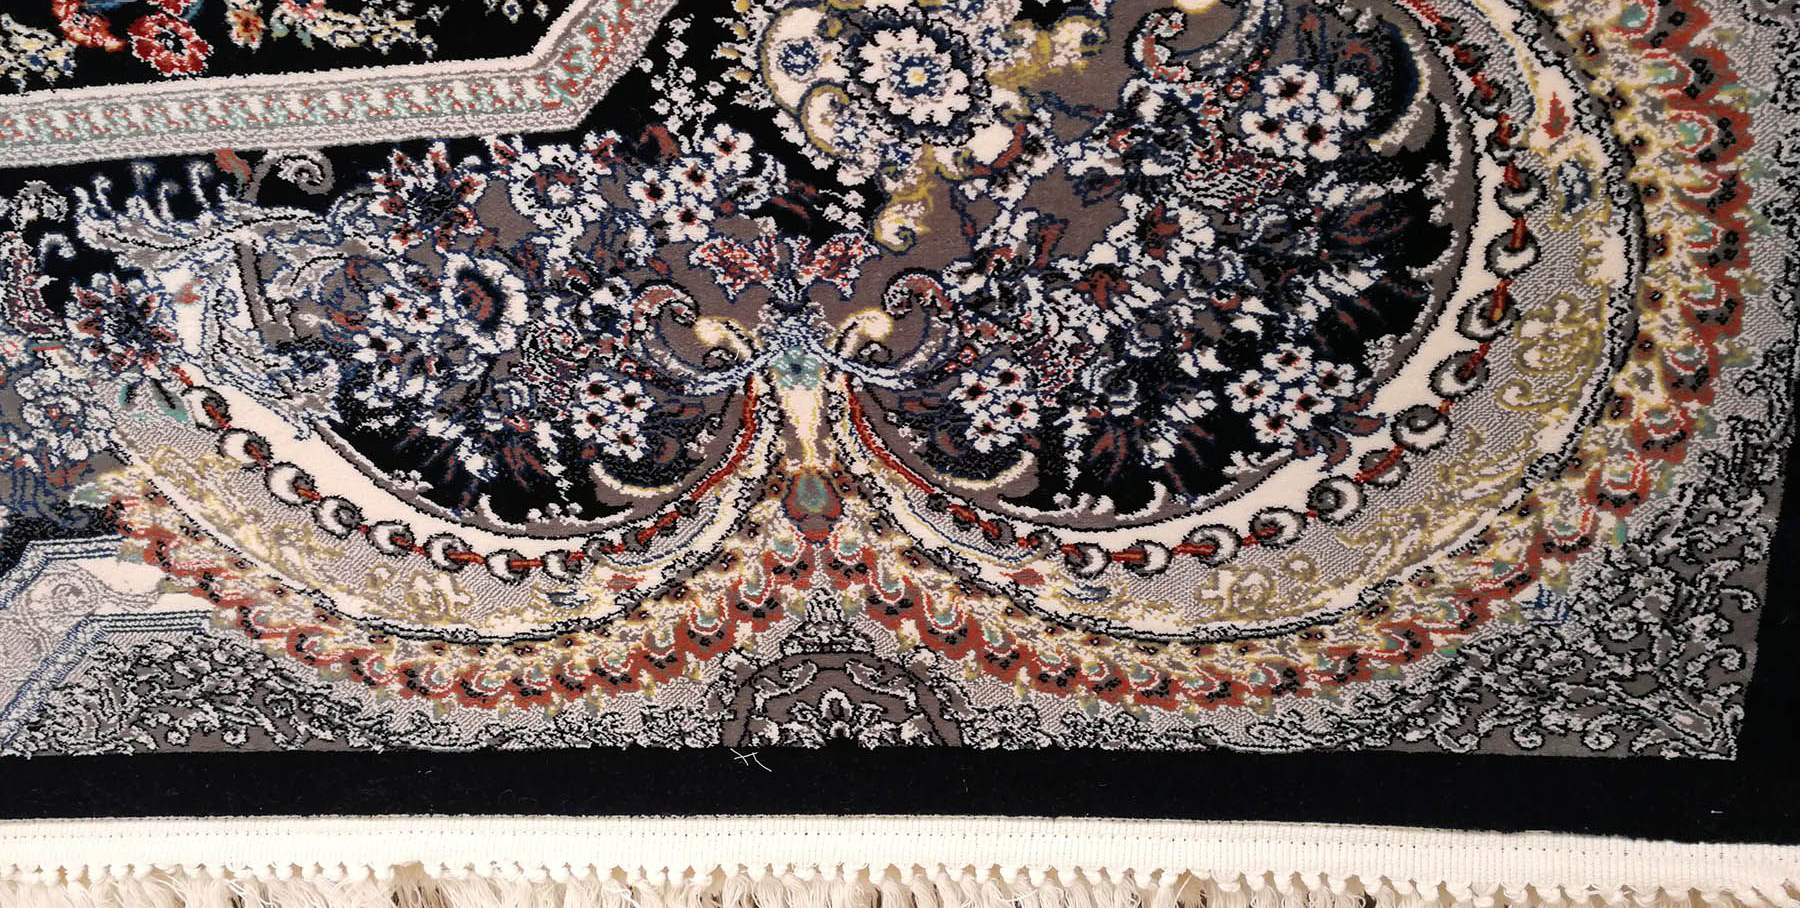 فرش ماشینی زمرد مشهد مدل تاج الماس زمینه سورمه ای